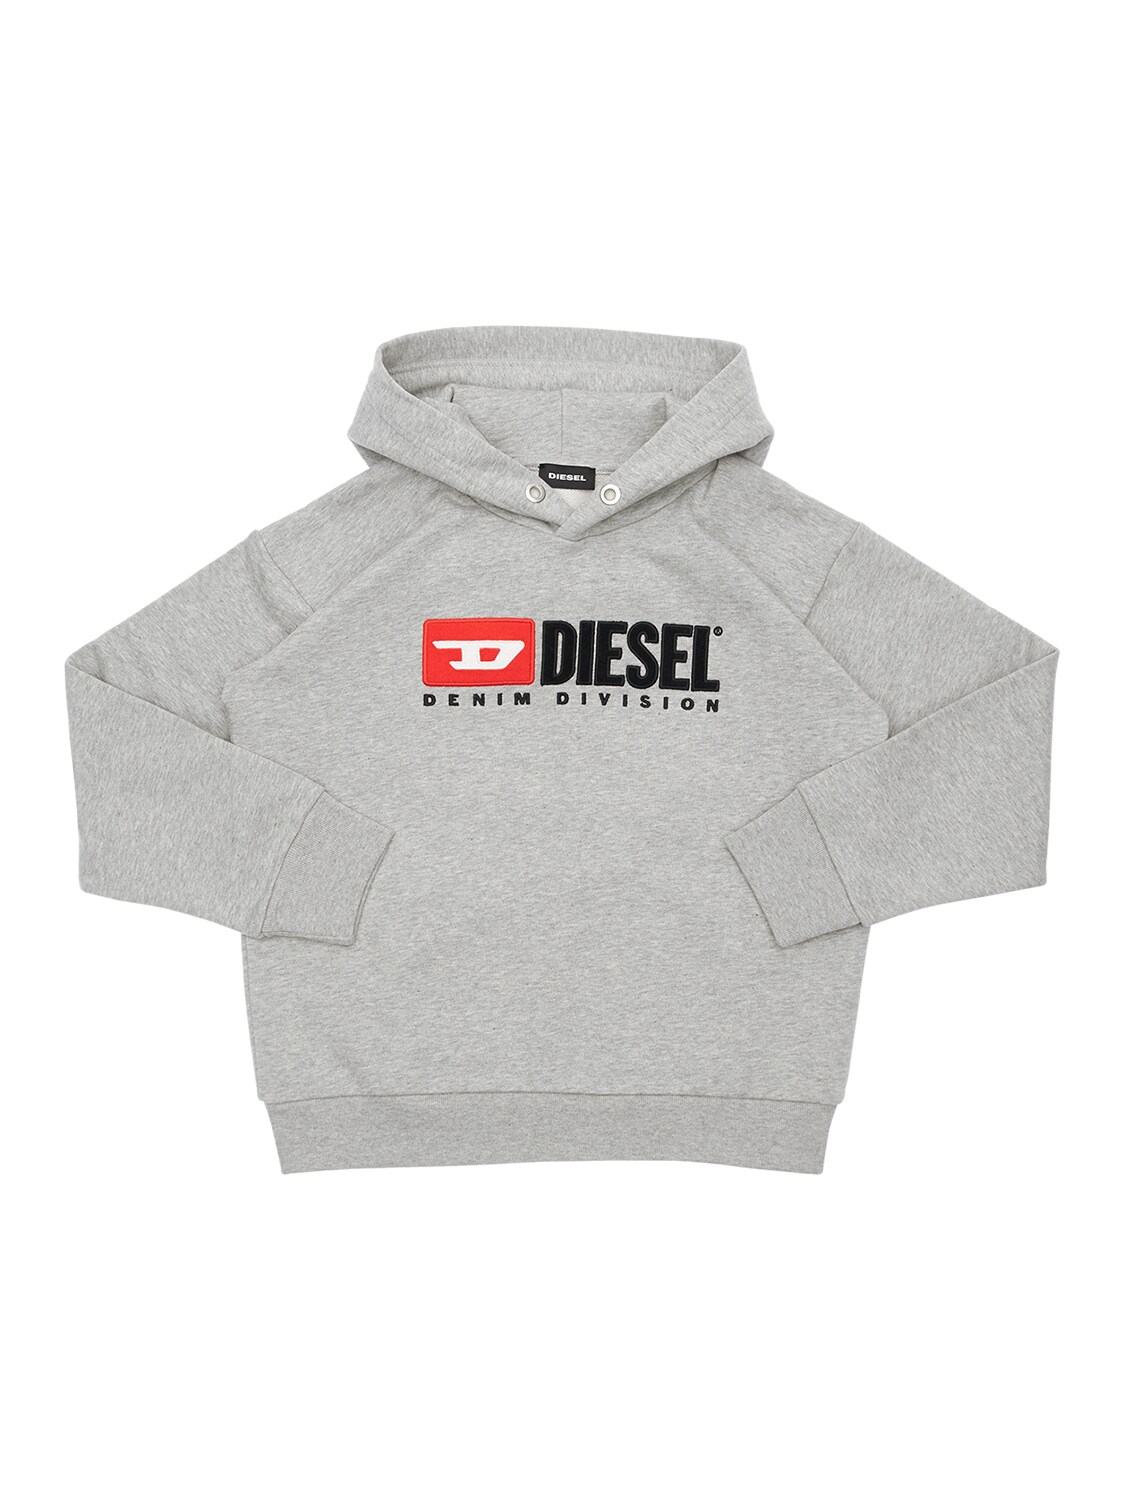 Diesel Kids' Flocked Logo Cotton Sweatshirt In Grey